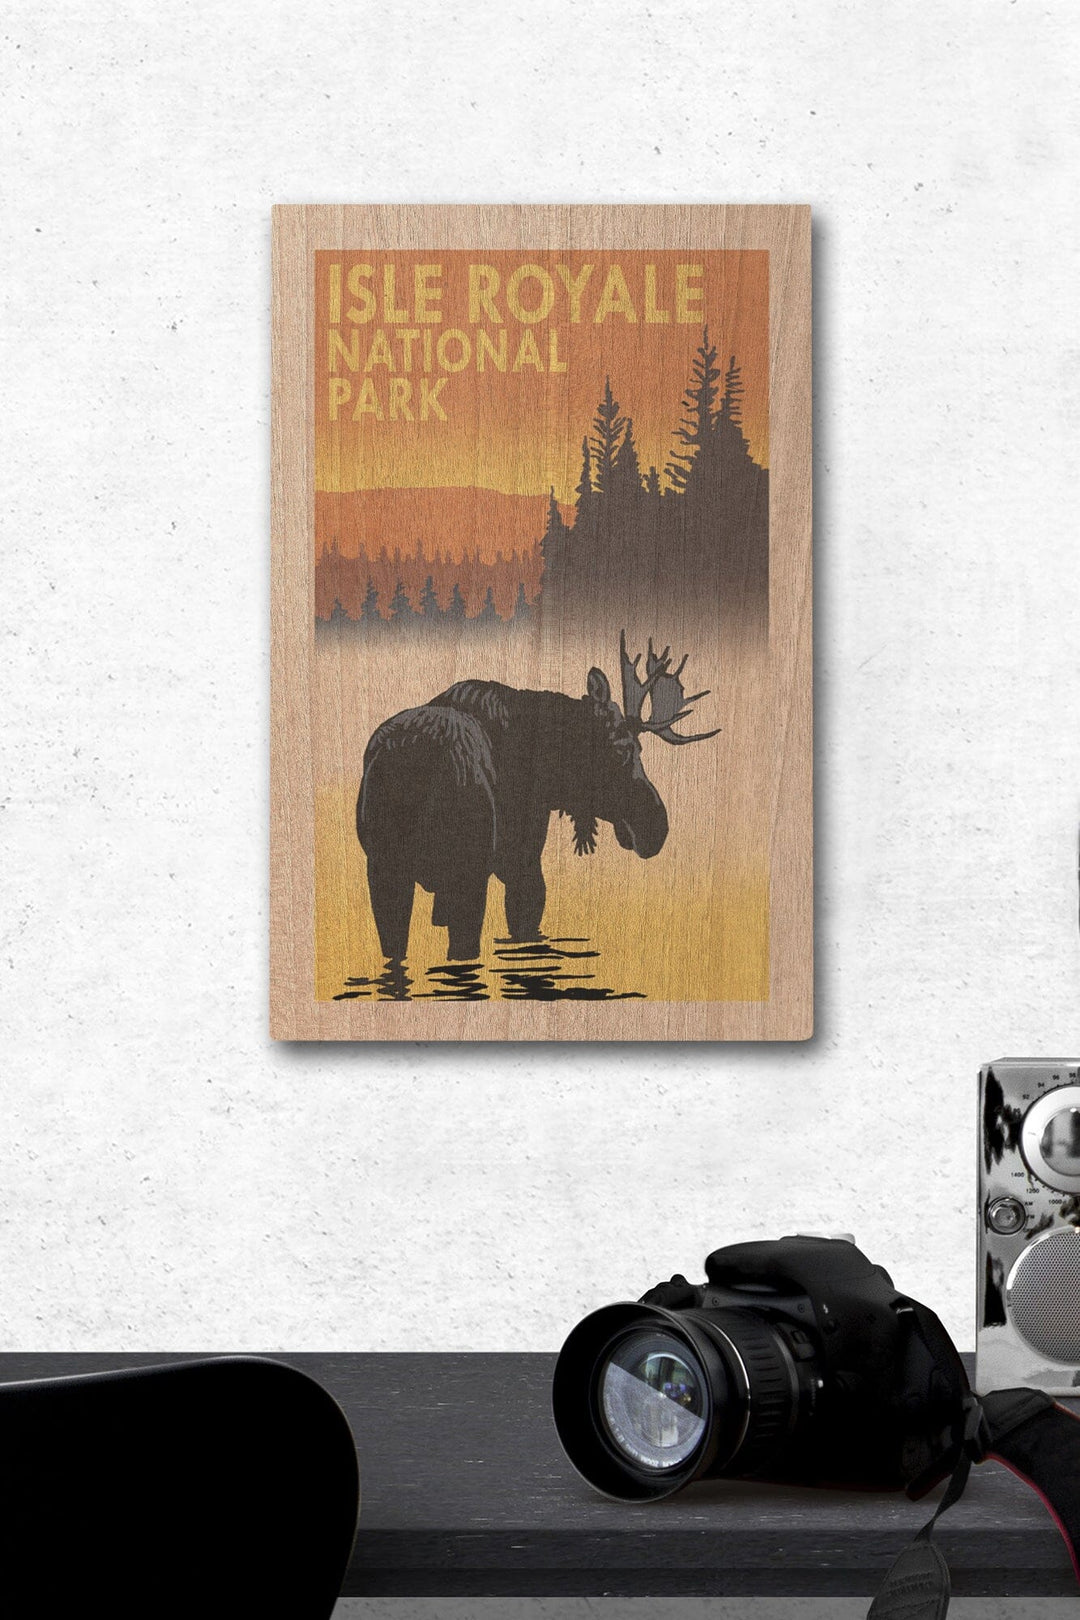 Isle Royale National Park, Michigan, Moose at Dawn, Lantern Press Artwork, Wood Signs and Postcards Wood Lantern Press 12 x 18 Wood Gallery Print 